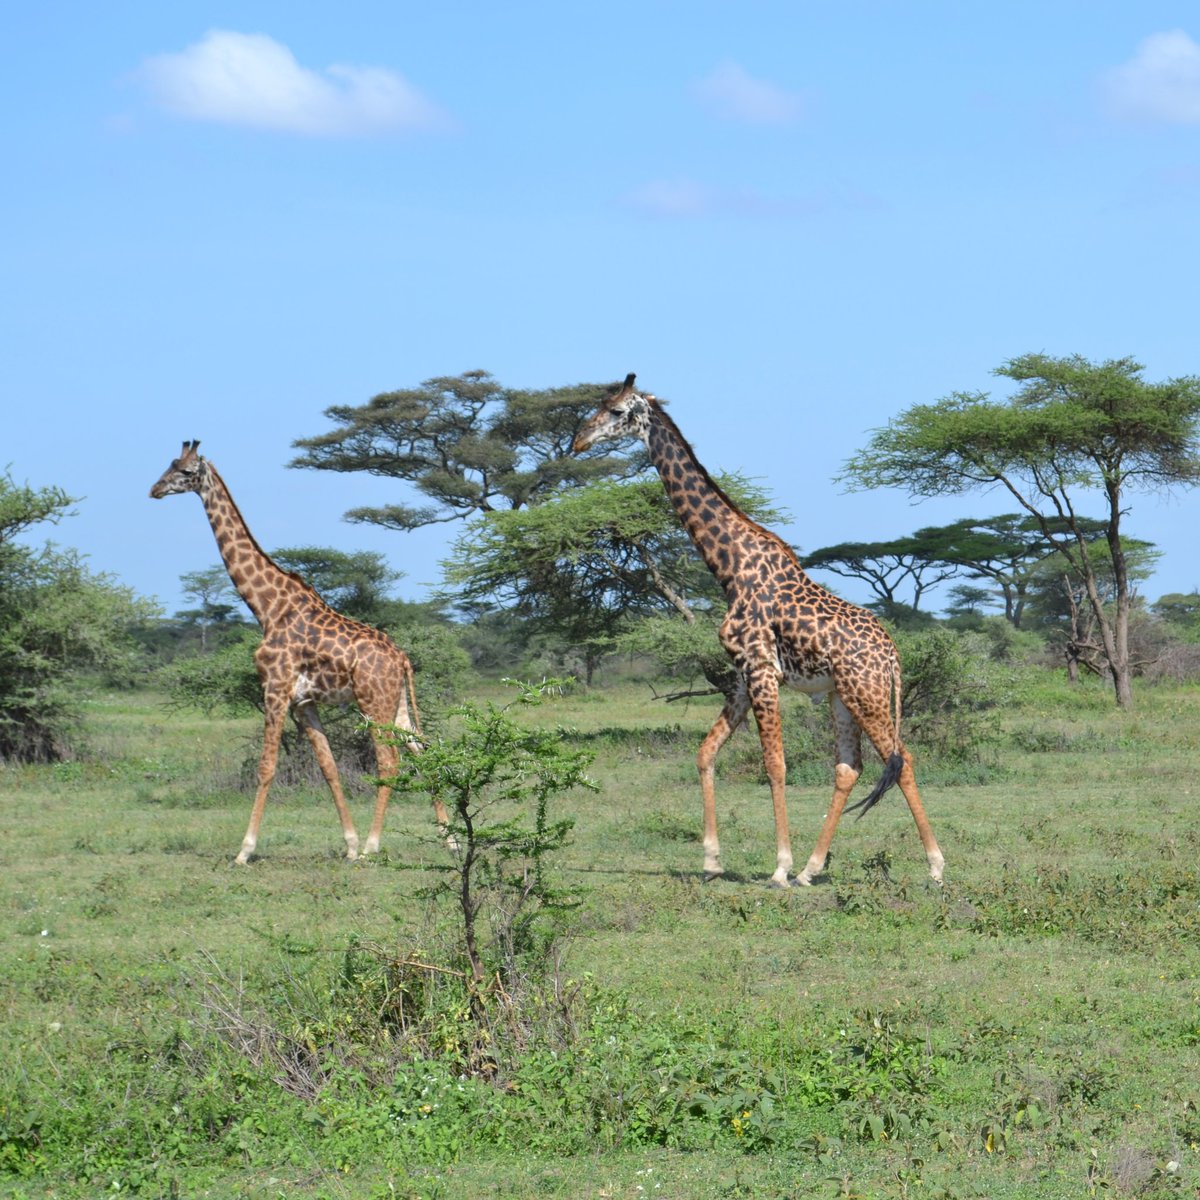 The giraffe we respect this animal as it's our sign of our nation. #weloveGiraffe #Giraffelovers #TanzaniaNationalparks #TanzaniaHakunaMatata 
#TwitcherAfricanSafaris #TwitcherTours #BirdwatchingTanzania #Photographytour 
 twitcherafricansafaris.com  info@twitcherafricansafaris.com